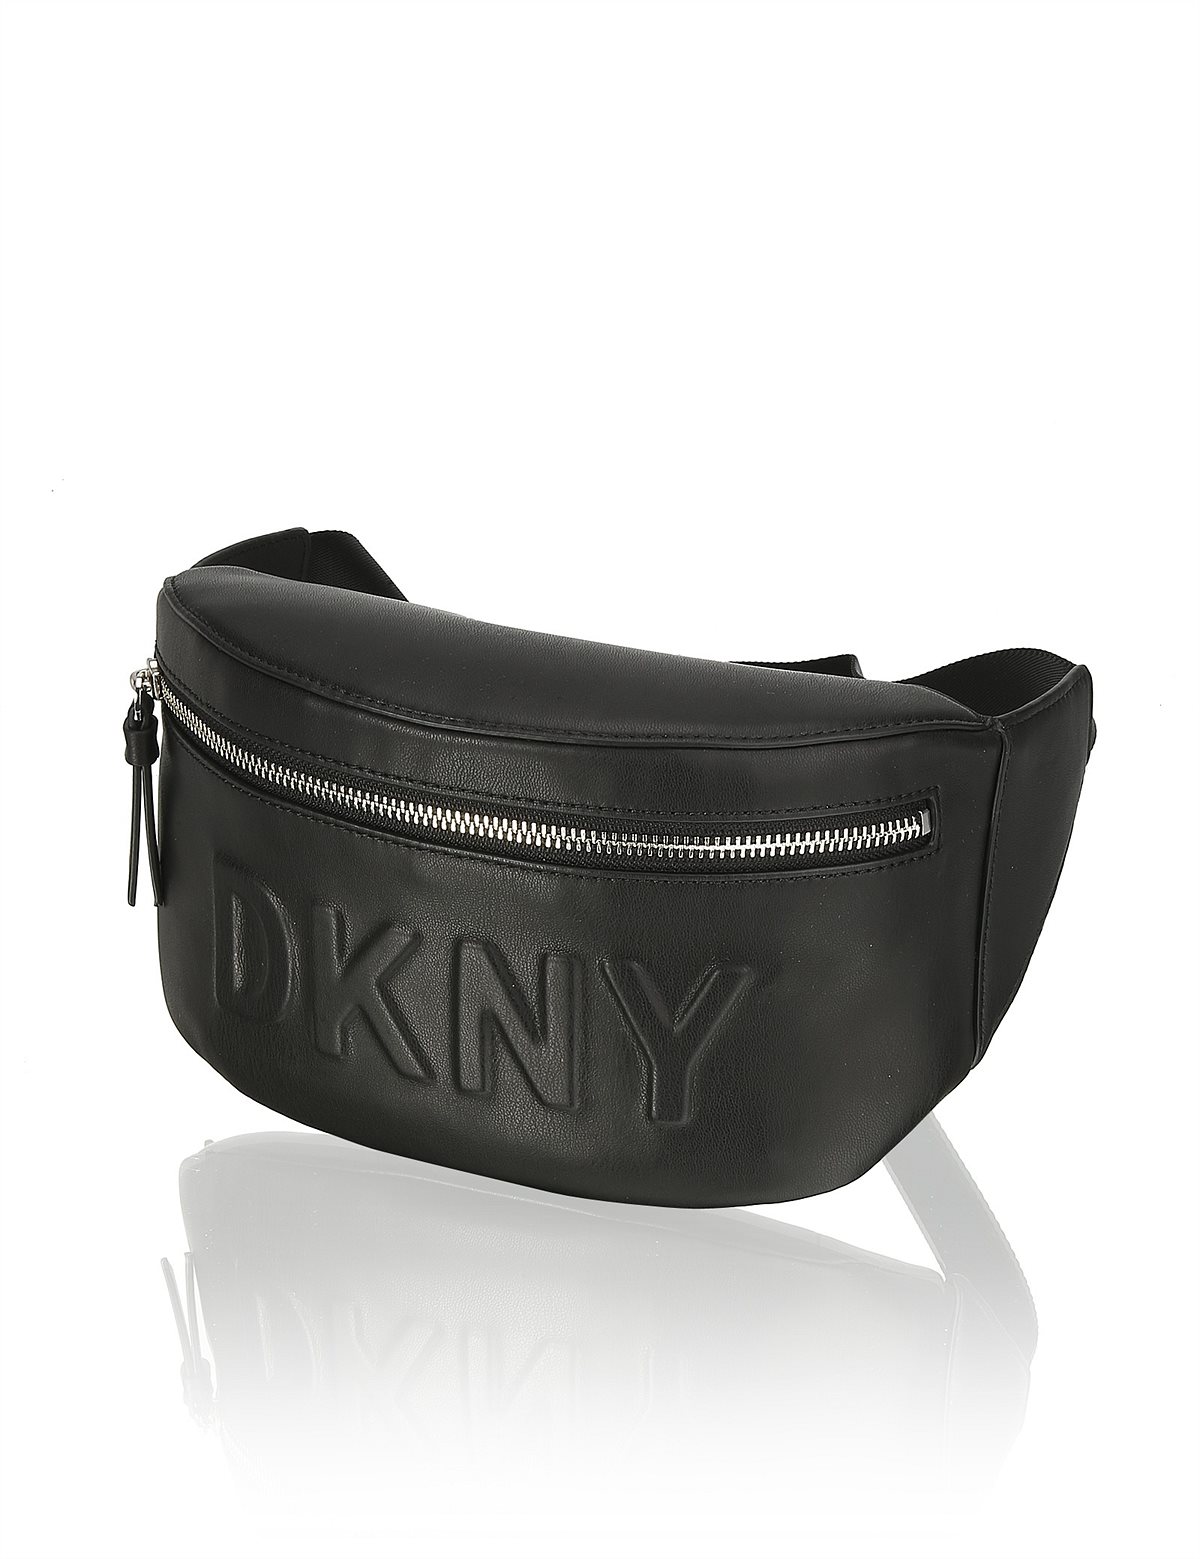 HUMANIC 13 DKNY Glattleder-Tasche EUR 150 6111700890